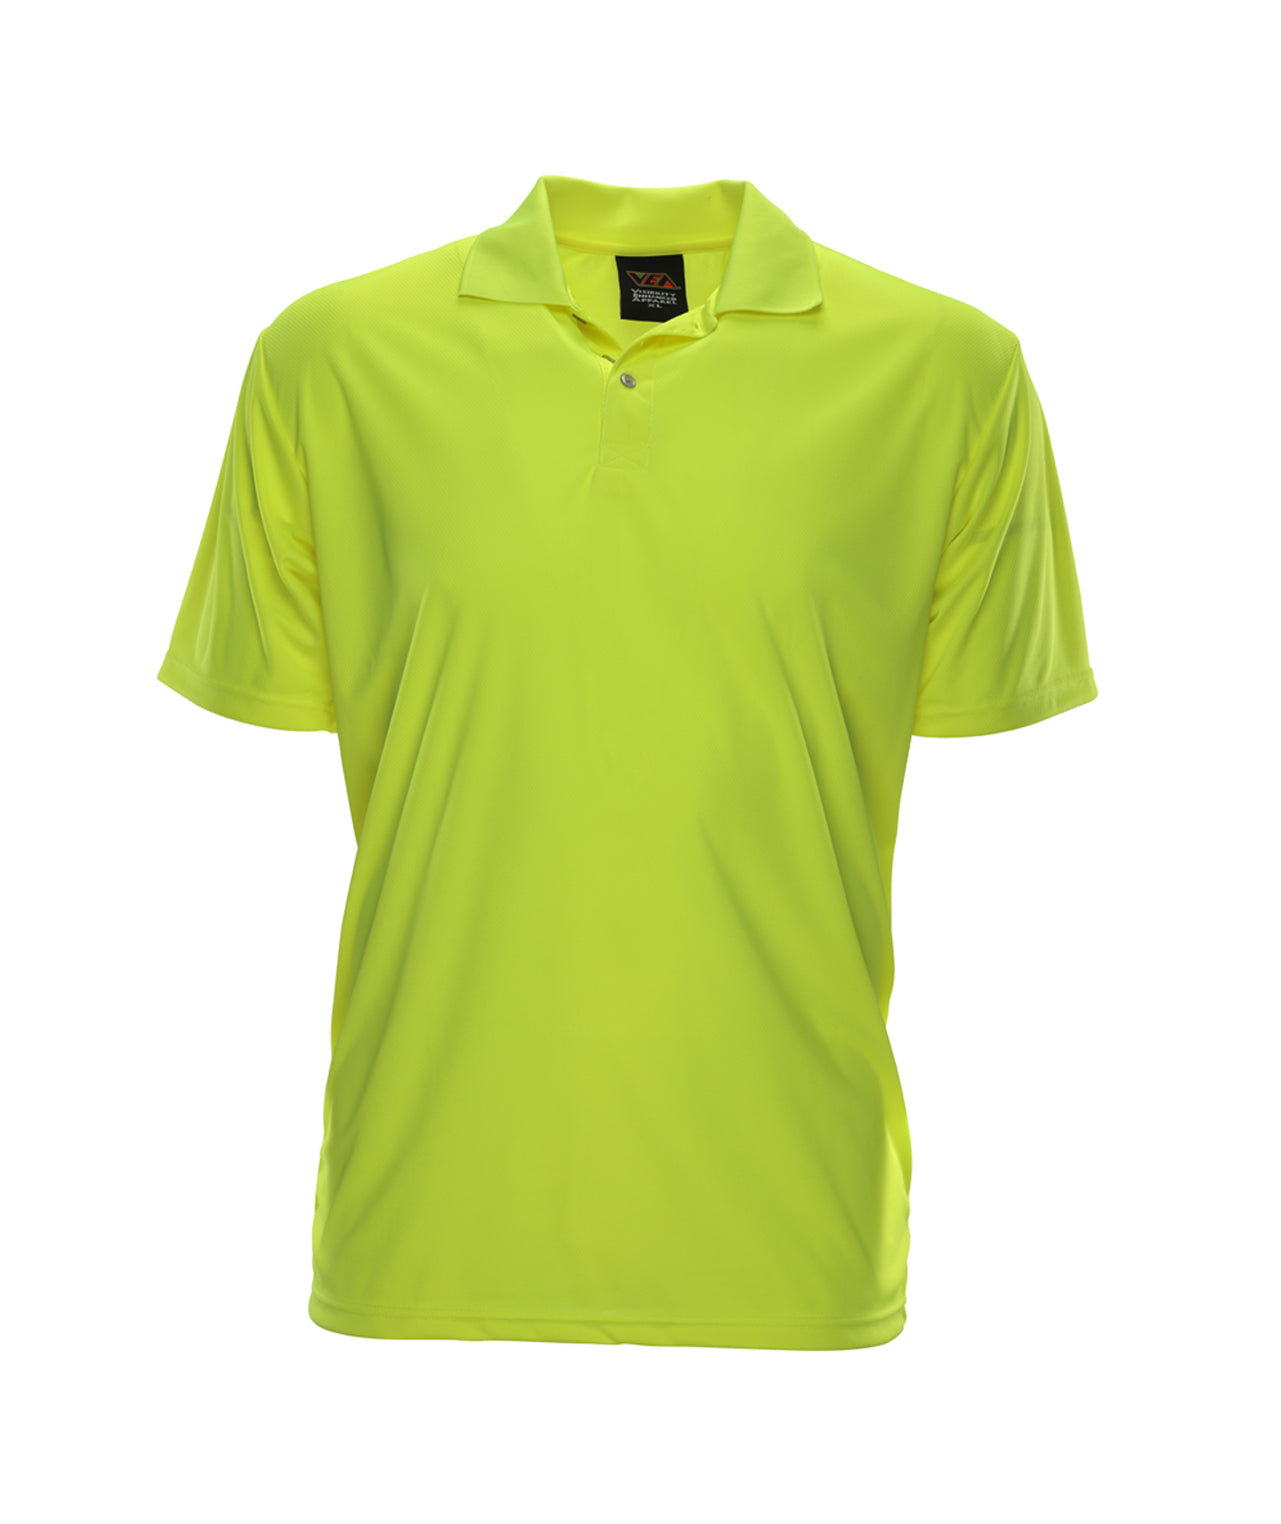 Lime Birdseye Knit Reflective Shirt: 300BNTLM – Reflective Apparel Inc